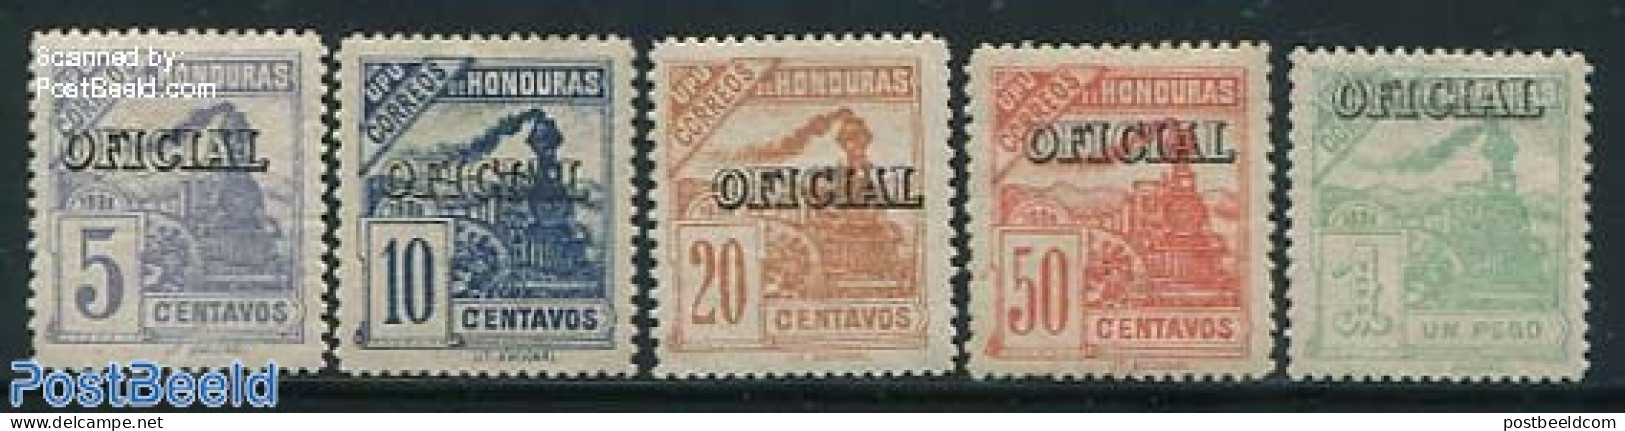 Honduras 1898 OFICIAL Overprints 5v, Mint NH, Transport - Railways - Eisenbahnen